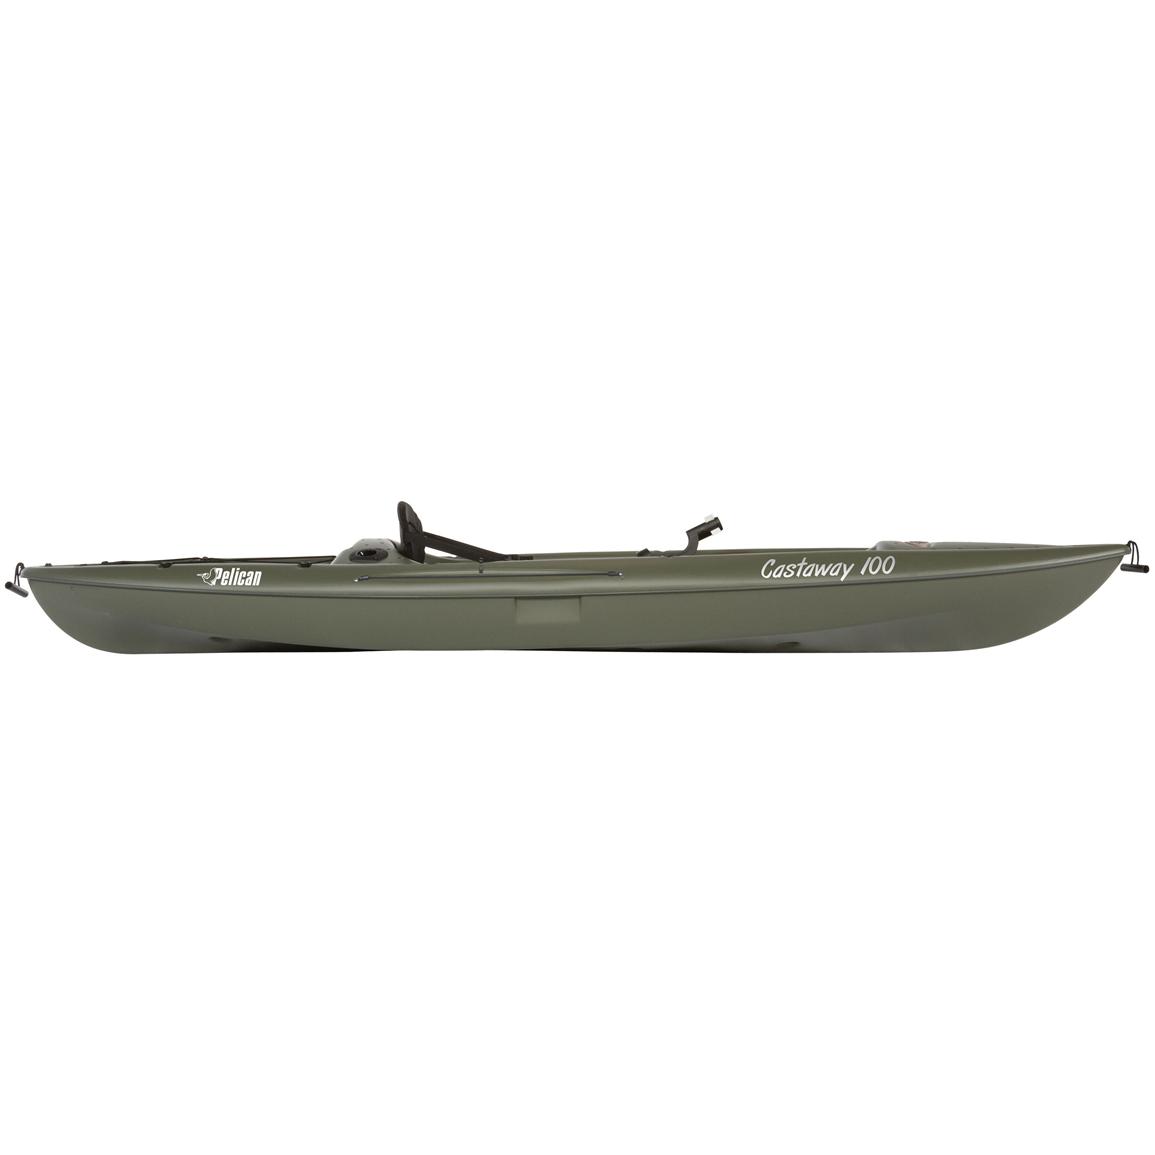 Pelican™ Castaway 100 Kayak, Khaki - 206252, Canoes & Kayaks at Sportsman's Guide